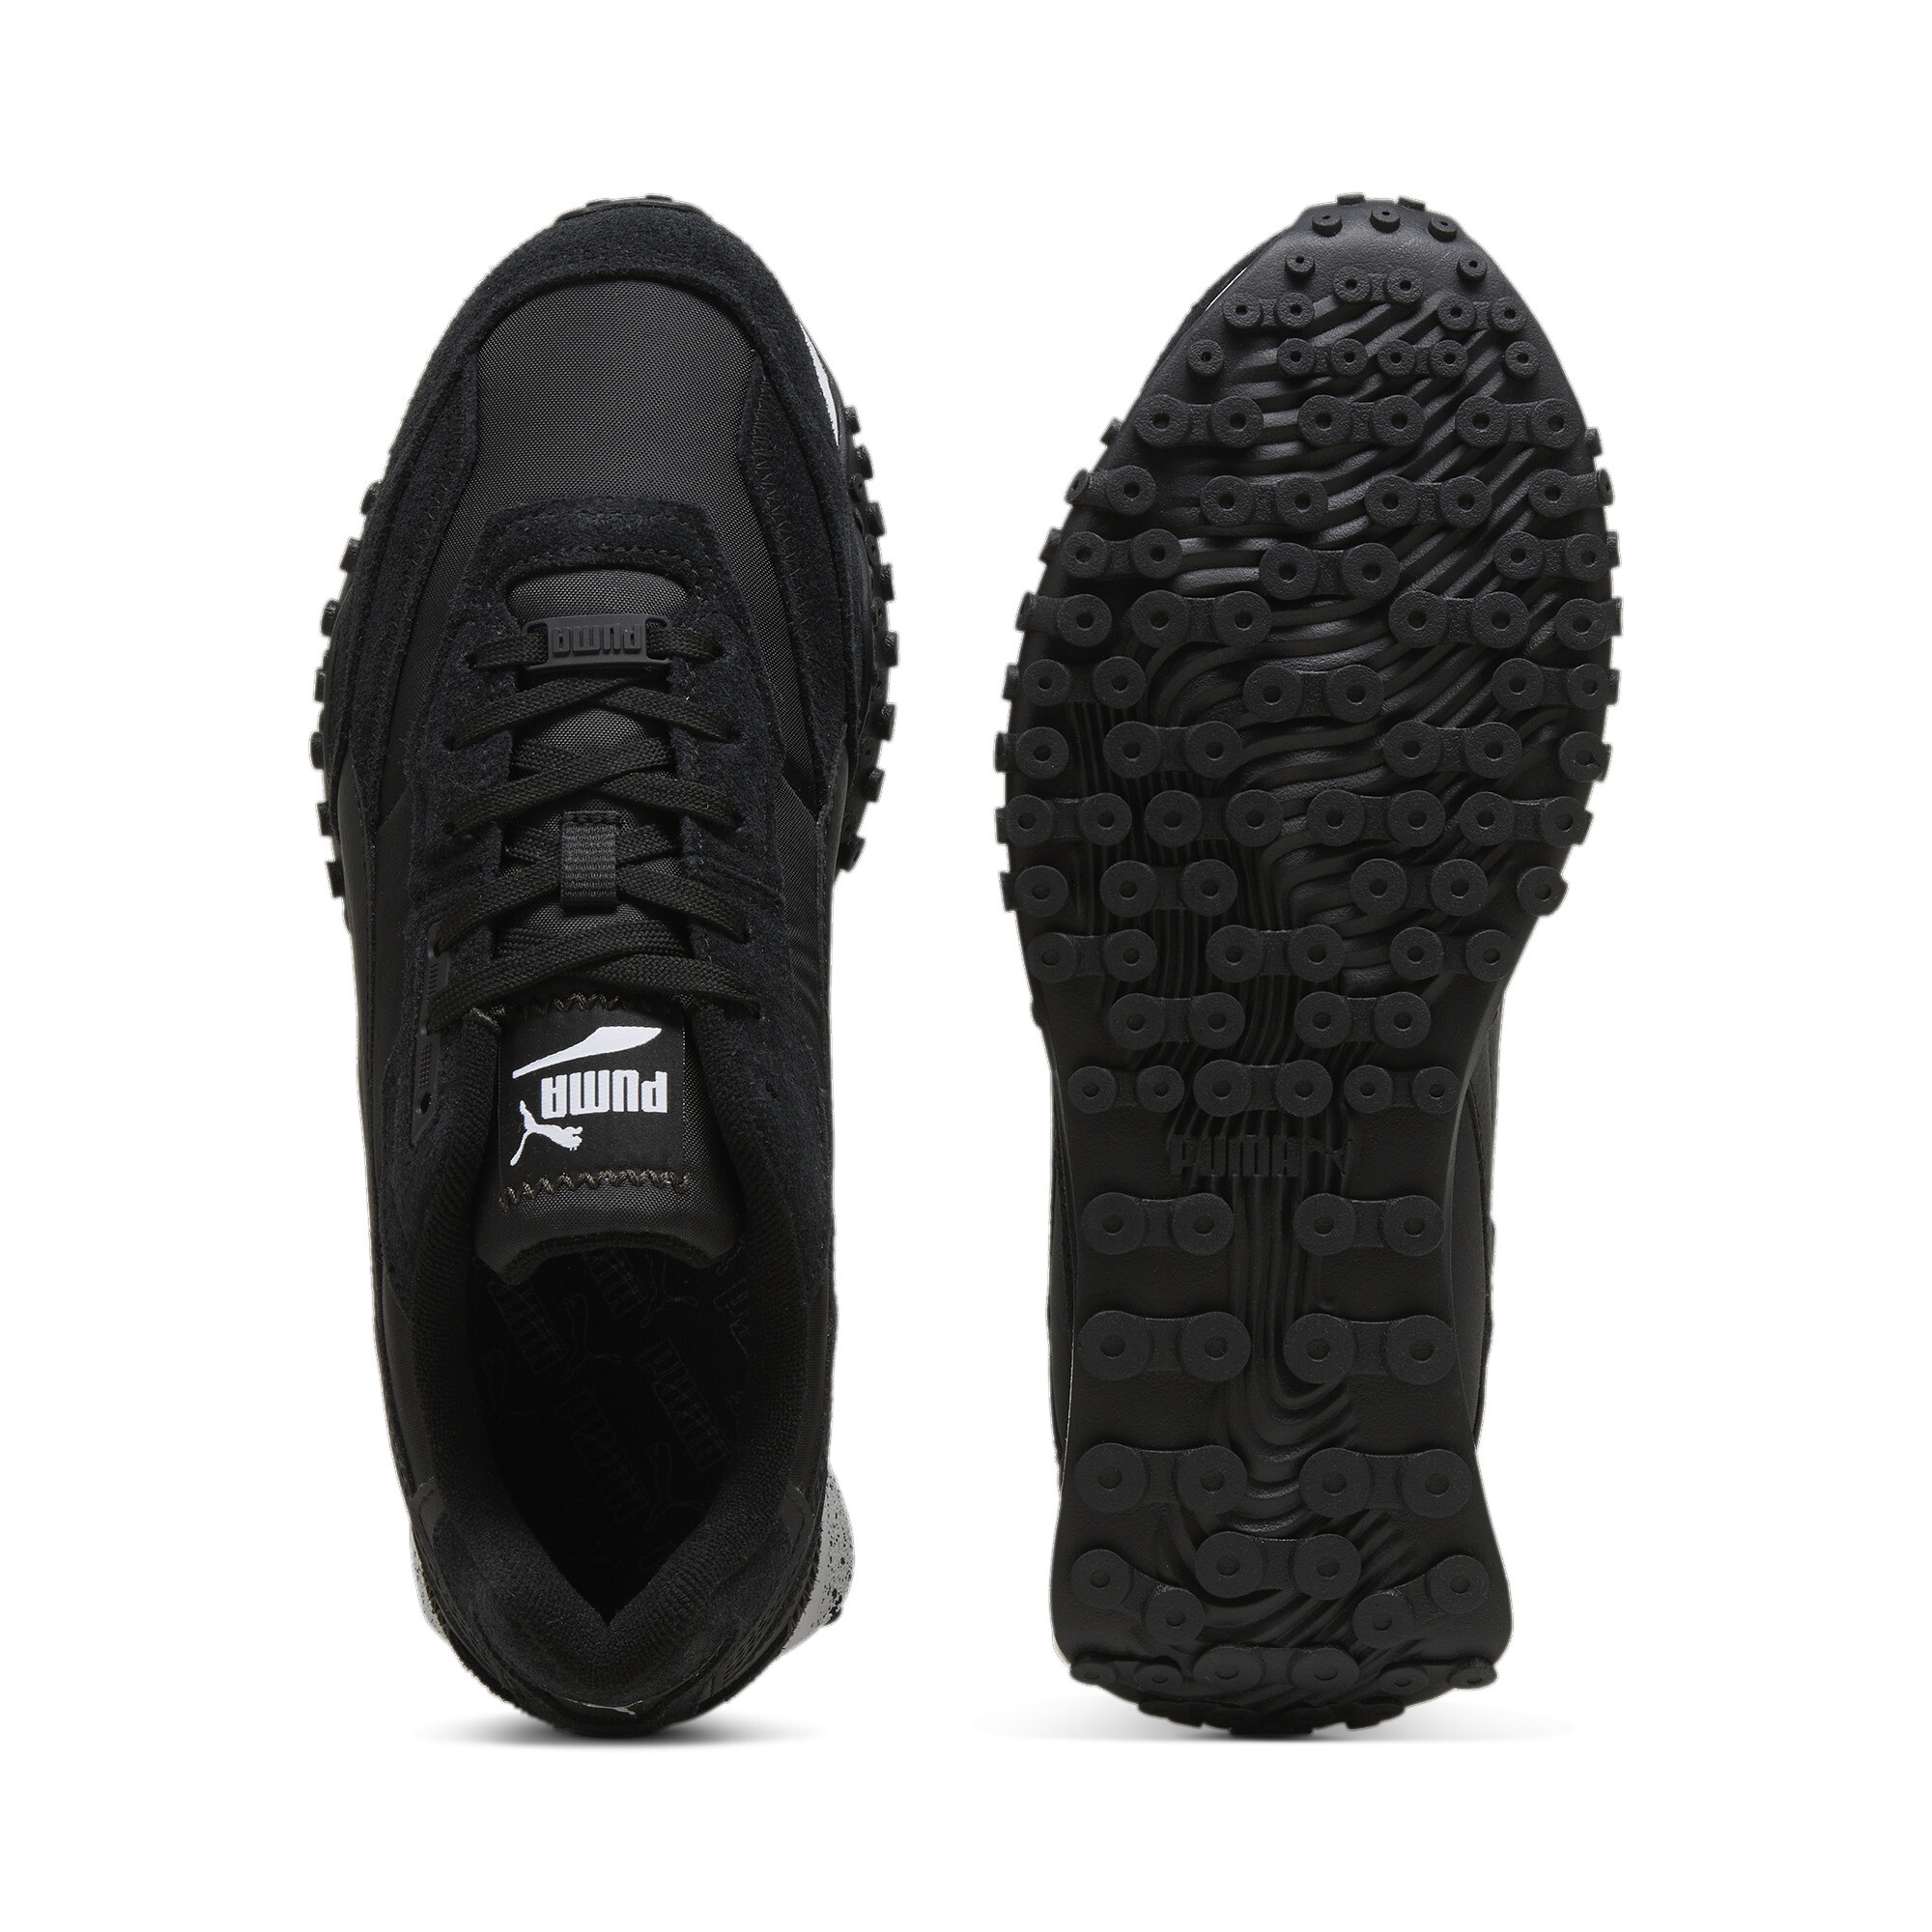 Men's PUMA Blktop Rider Sneakers In Black, Size EU 37